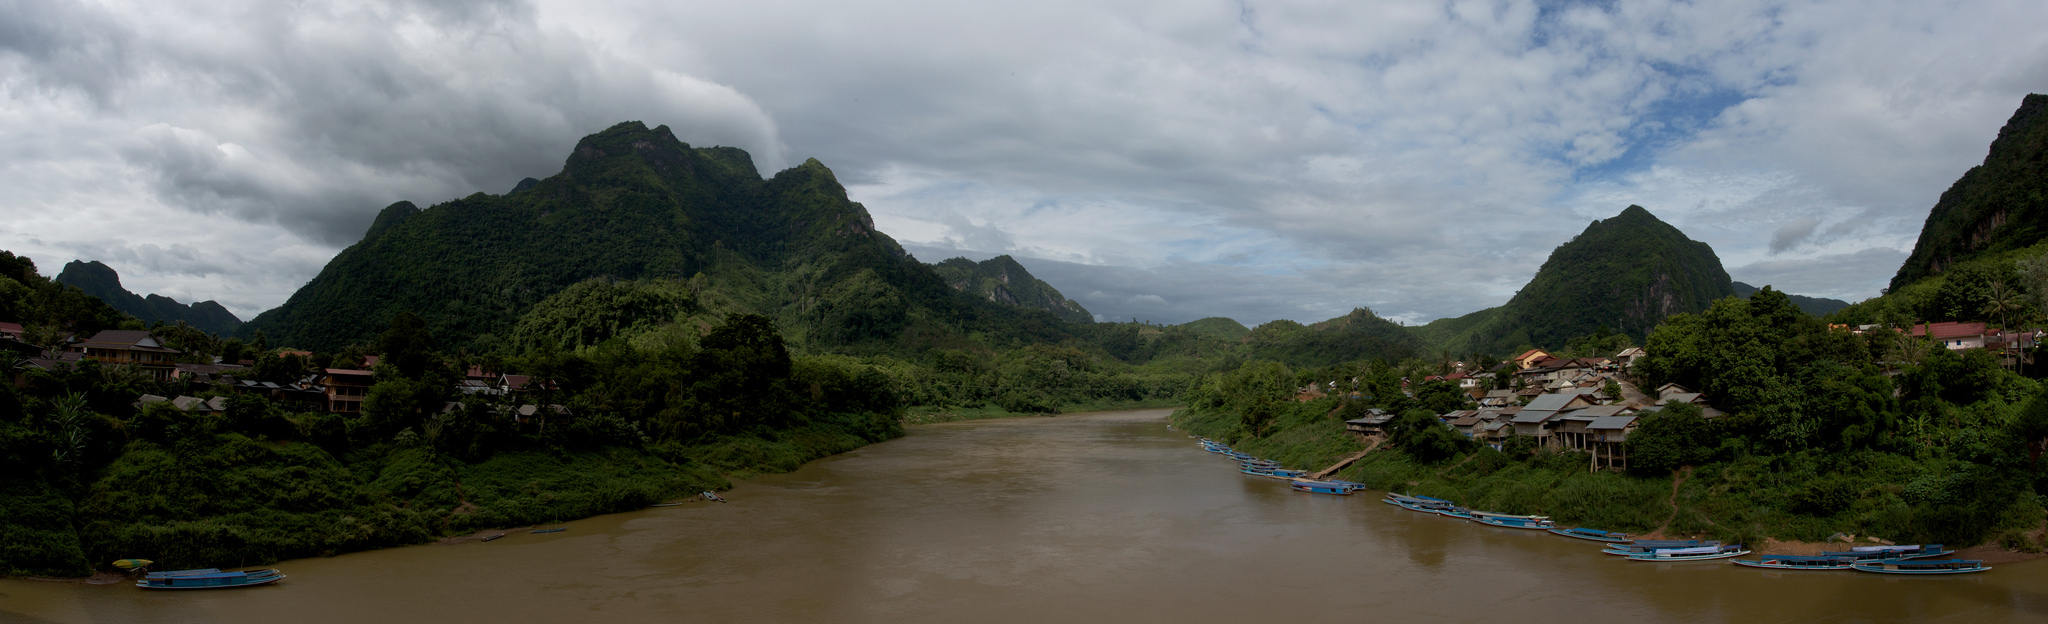 Nong Khiaw Laos panorama